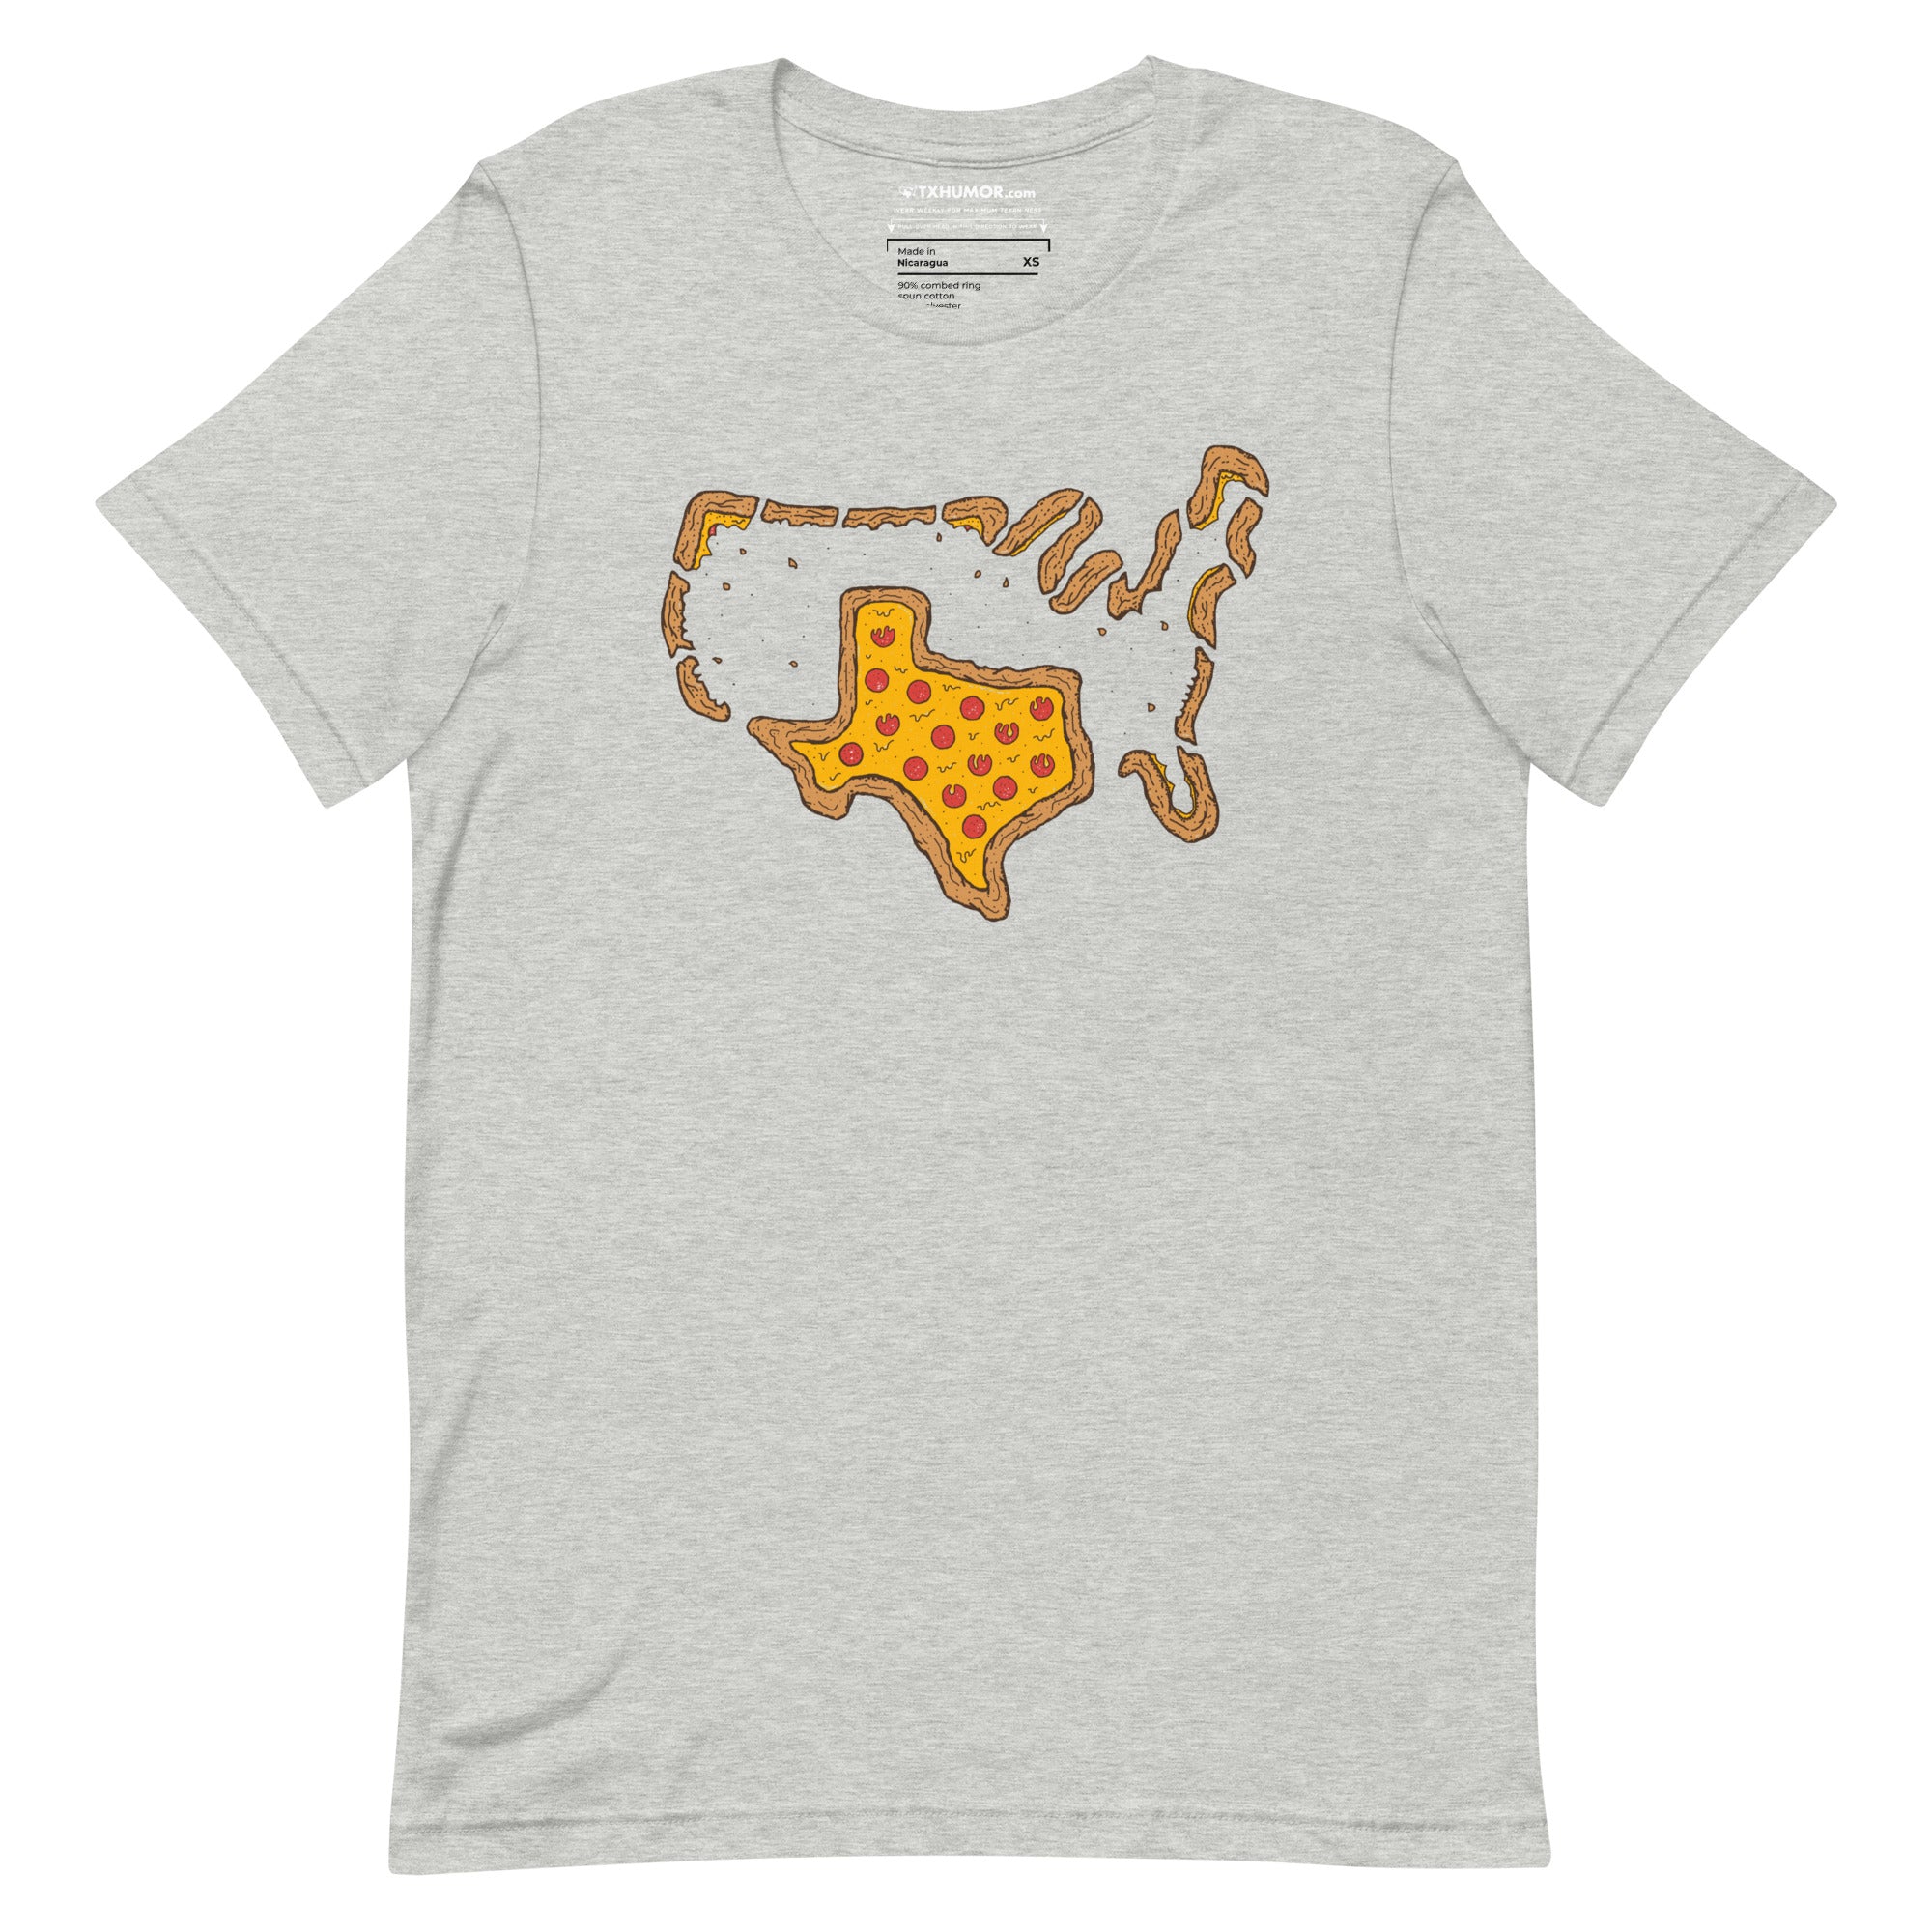 Grand Texas Pizza T-shirt